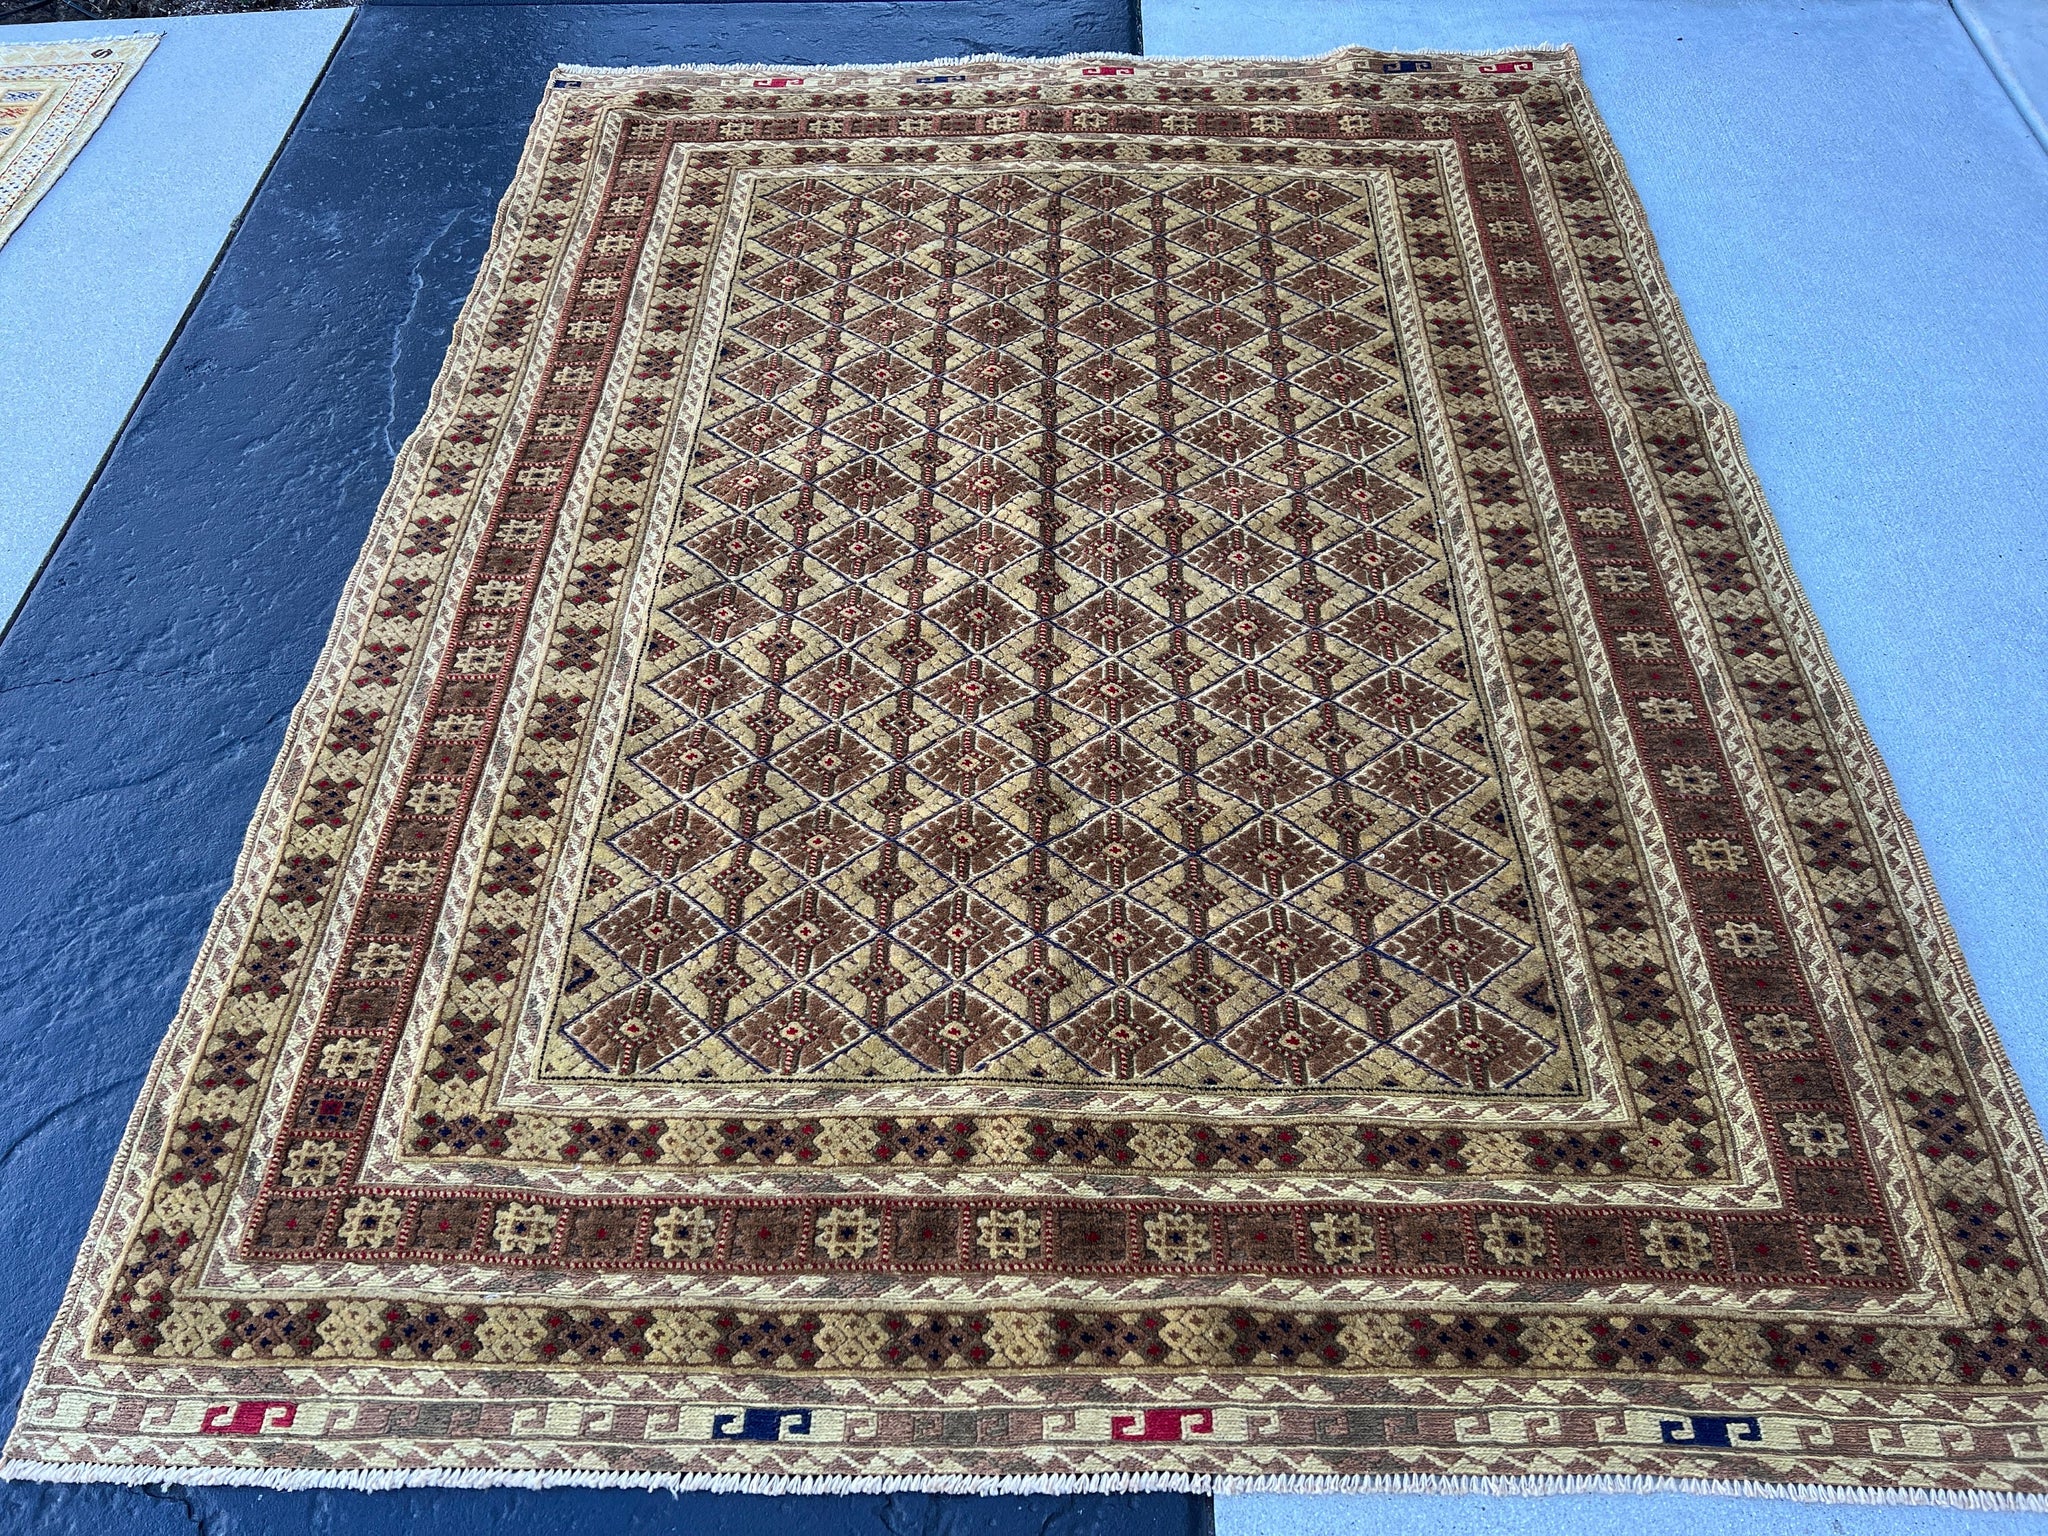 5x7 (150x215) Fair Trade Handmade Afghan Rug | Taupe Chocolate Cream Beige Crimson Red Midnight Blue Tan Cornsilk | Hand Knotted Geometric